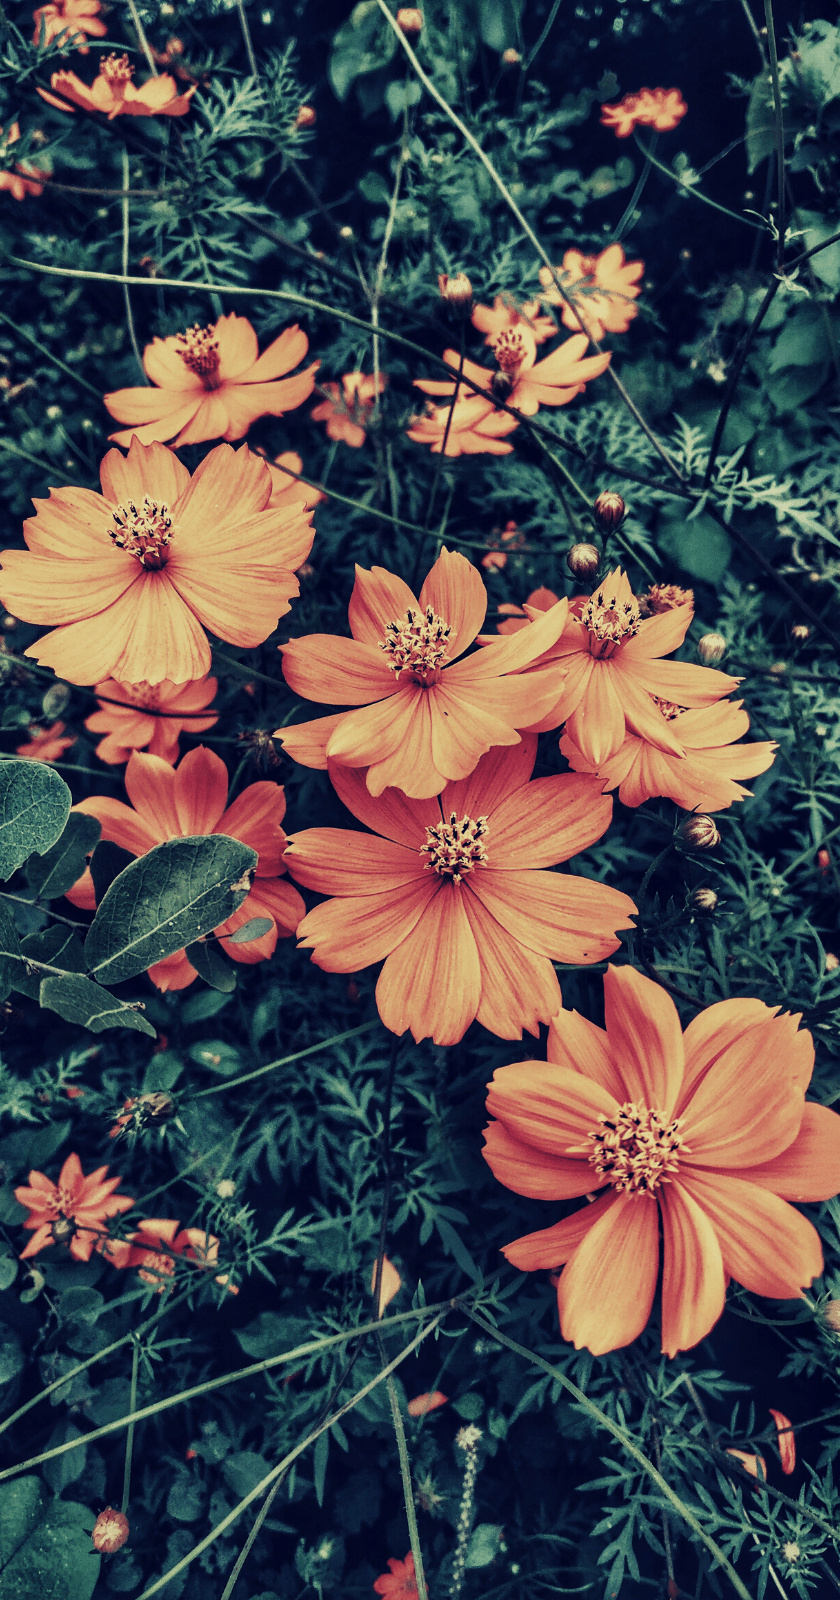 autumn-flowers. | download as a wallpaper here gloeckchen.de… | Flickr